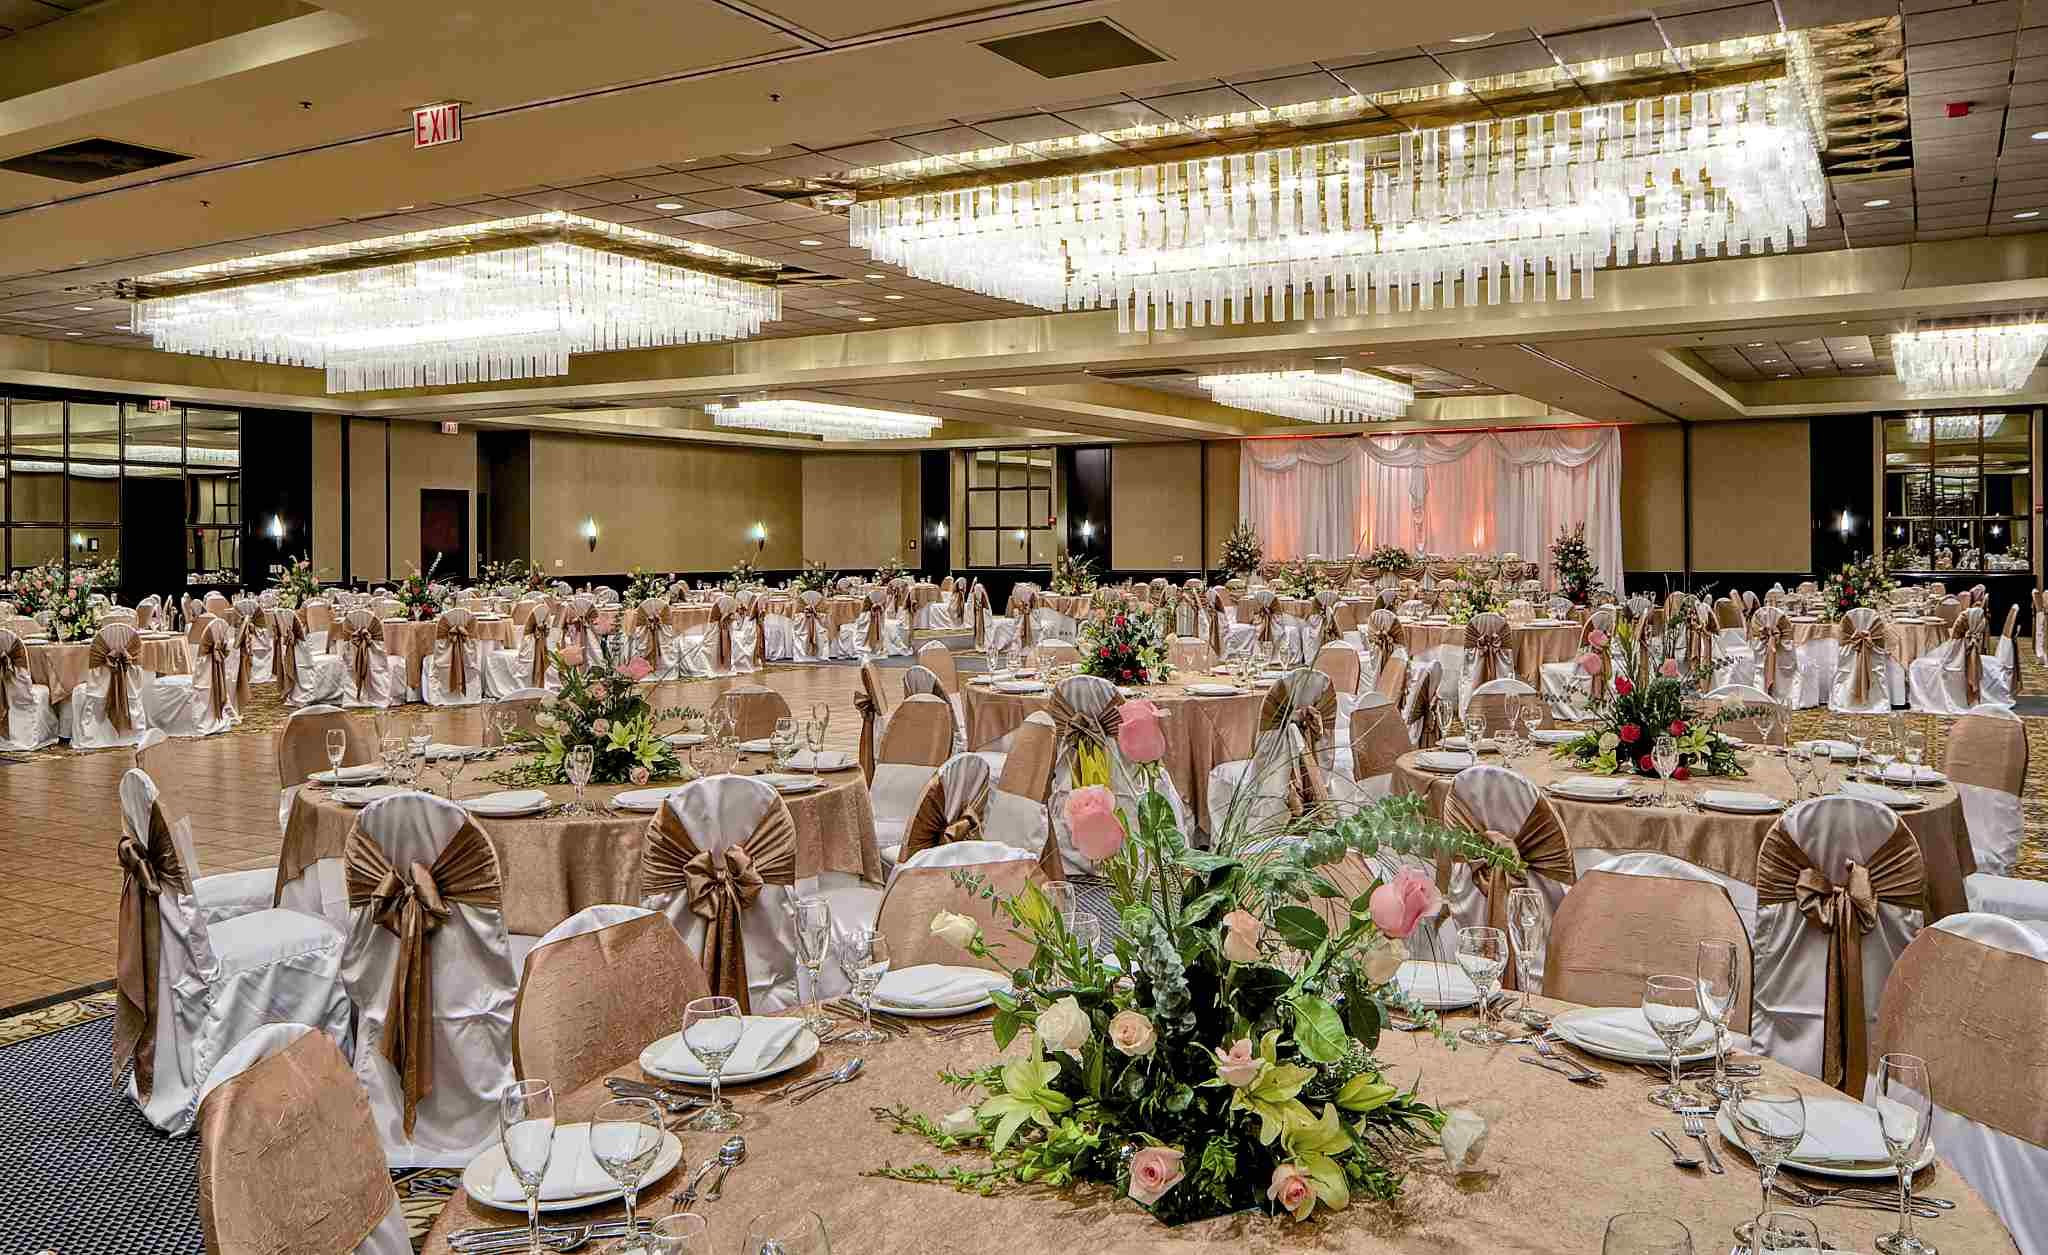 Affordable Chicago Wedding Venues
 Get Help Choosing Chicago Wedding Reception Venues